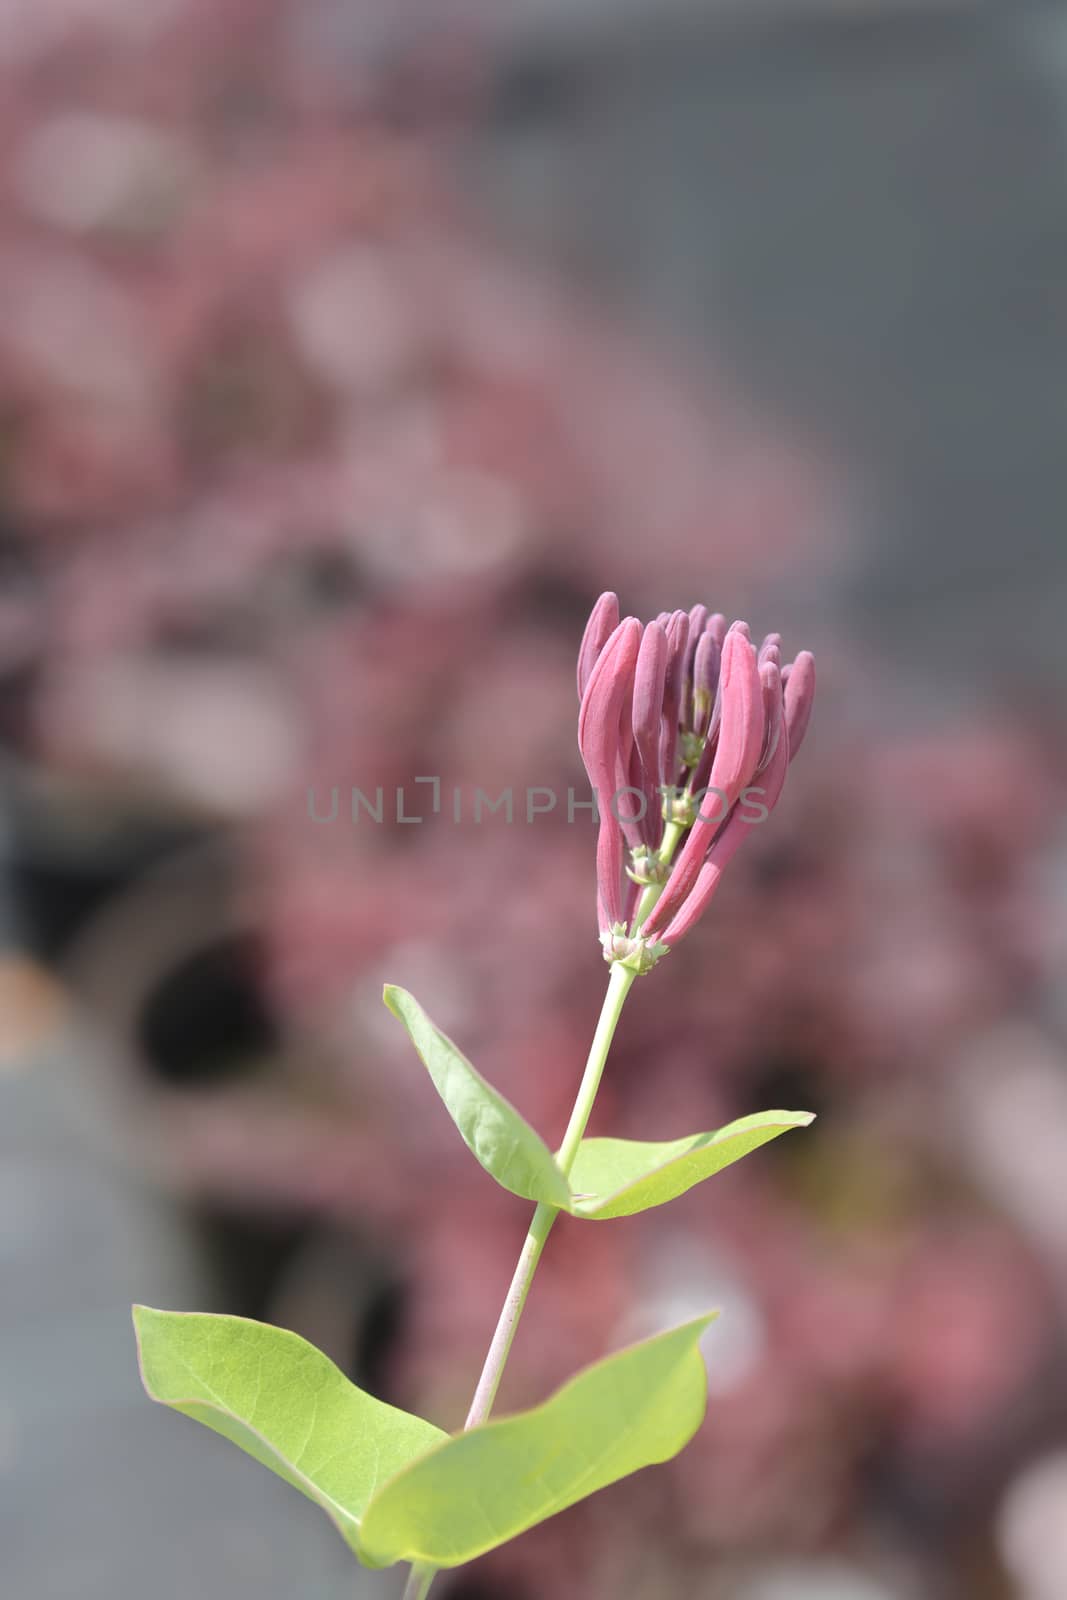 Honeysuckle Dropmore Scarlet flower buds - Latin name - Lonicera x brownii Dropmore Scarlet